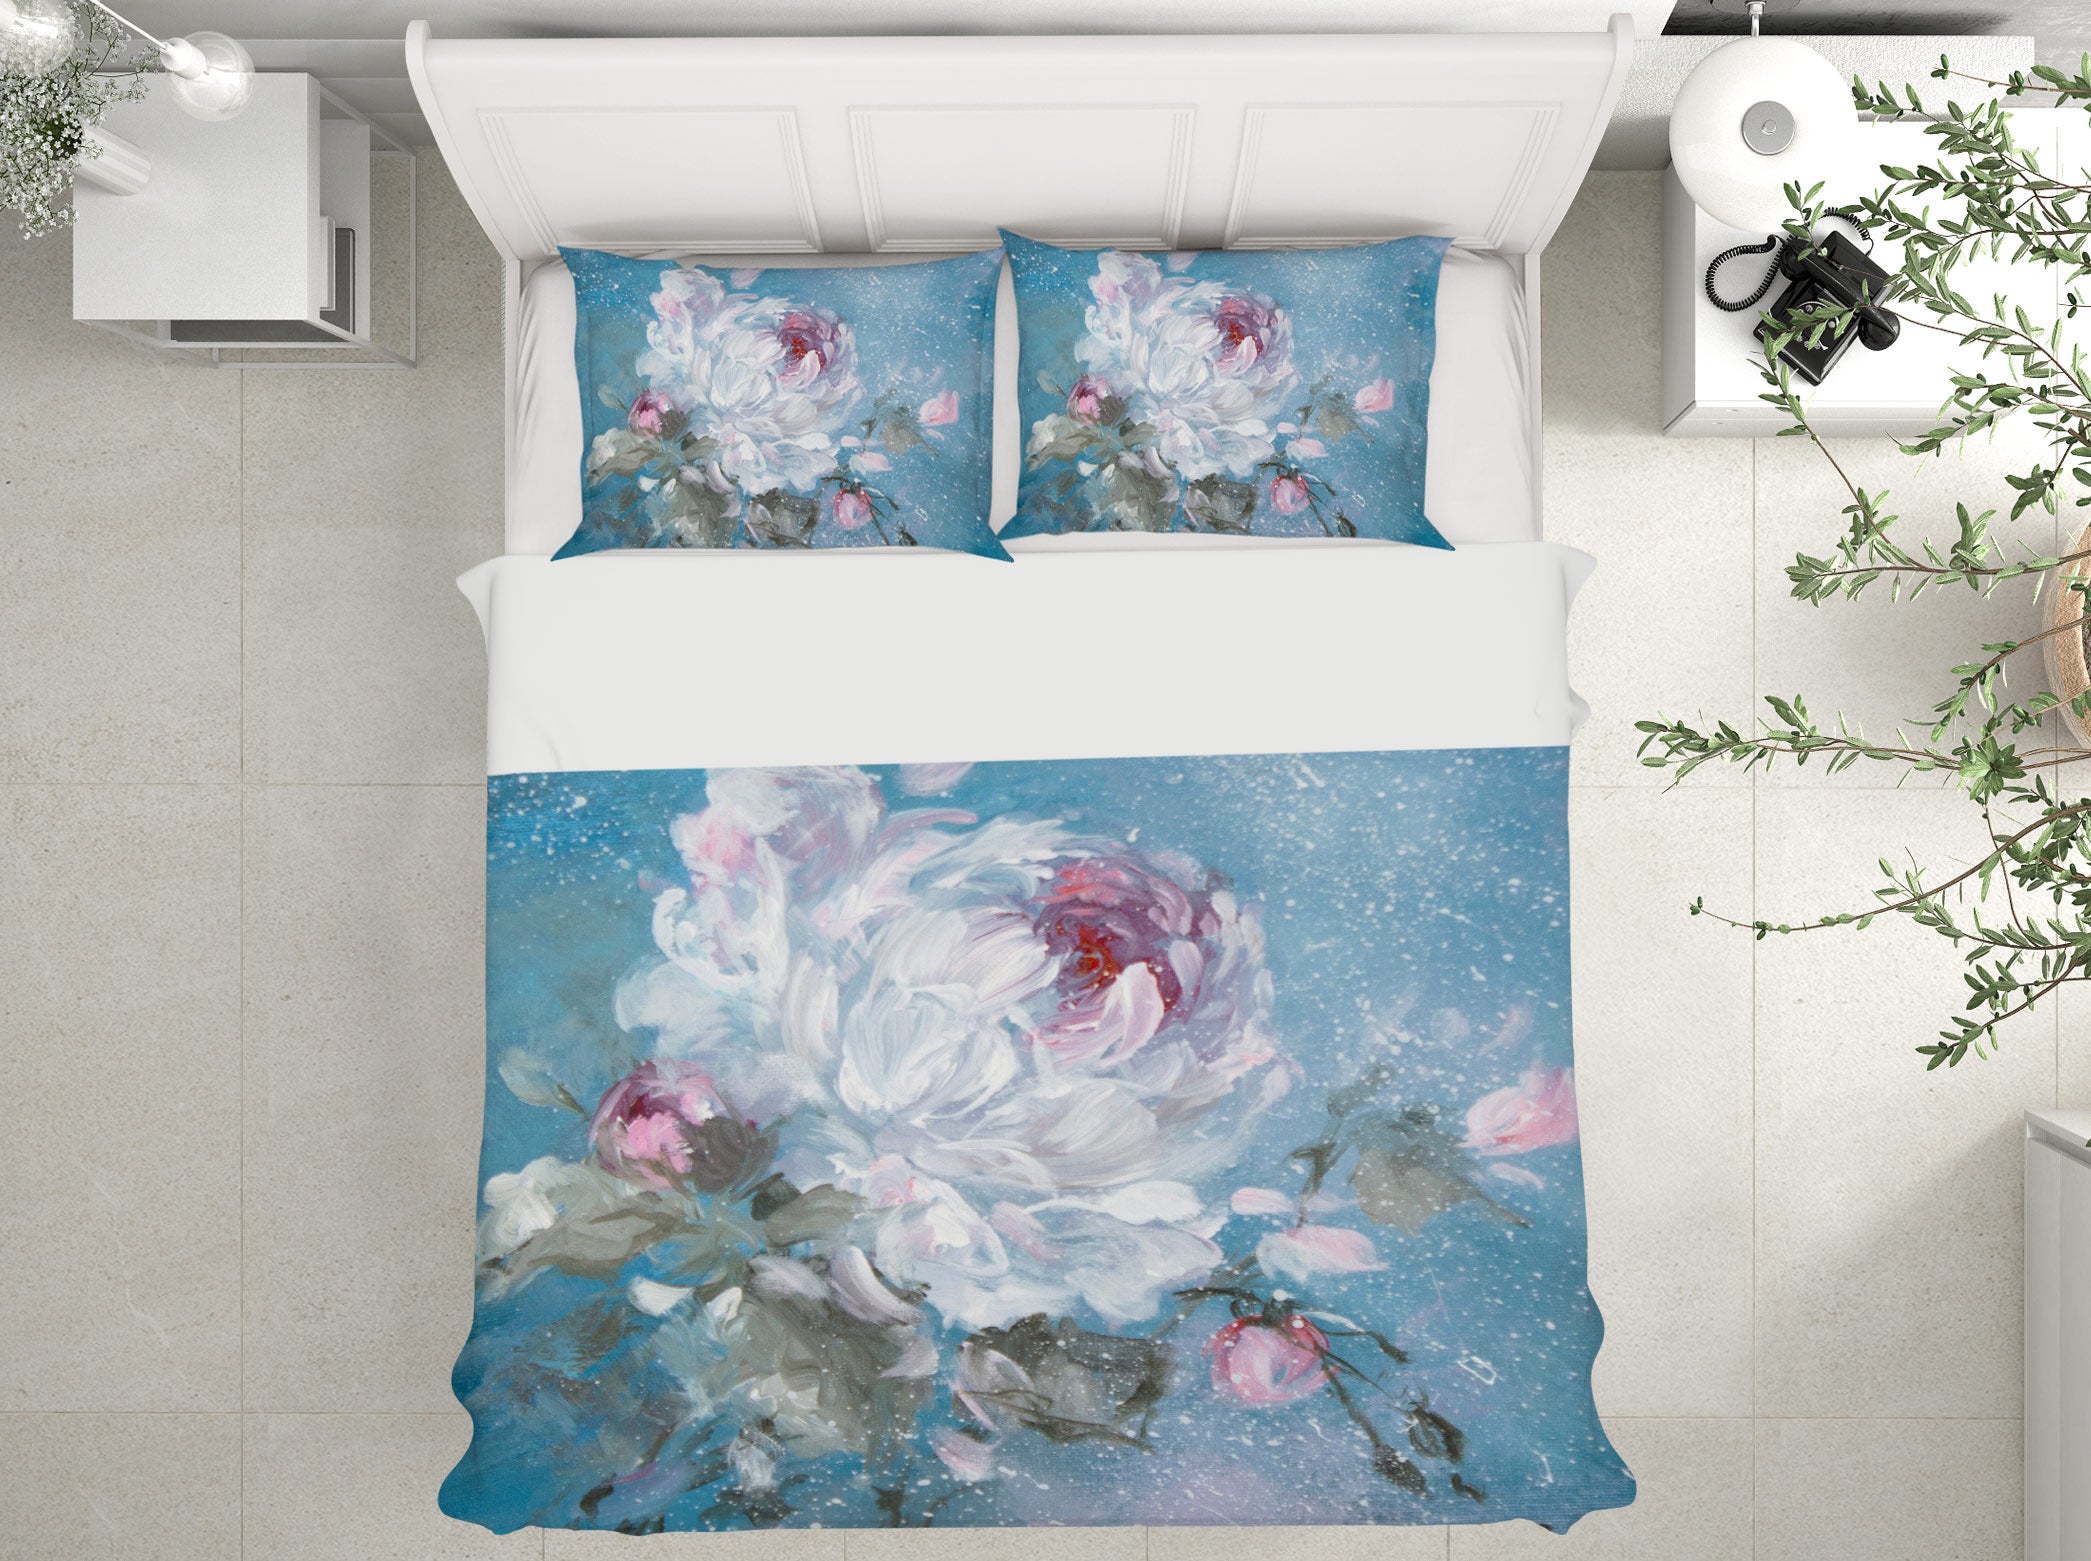 3D White Flower 2153 Debi Coules Bedding Bed Pillowcases Quilt